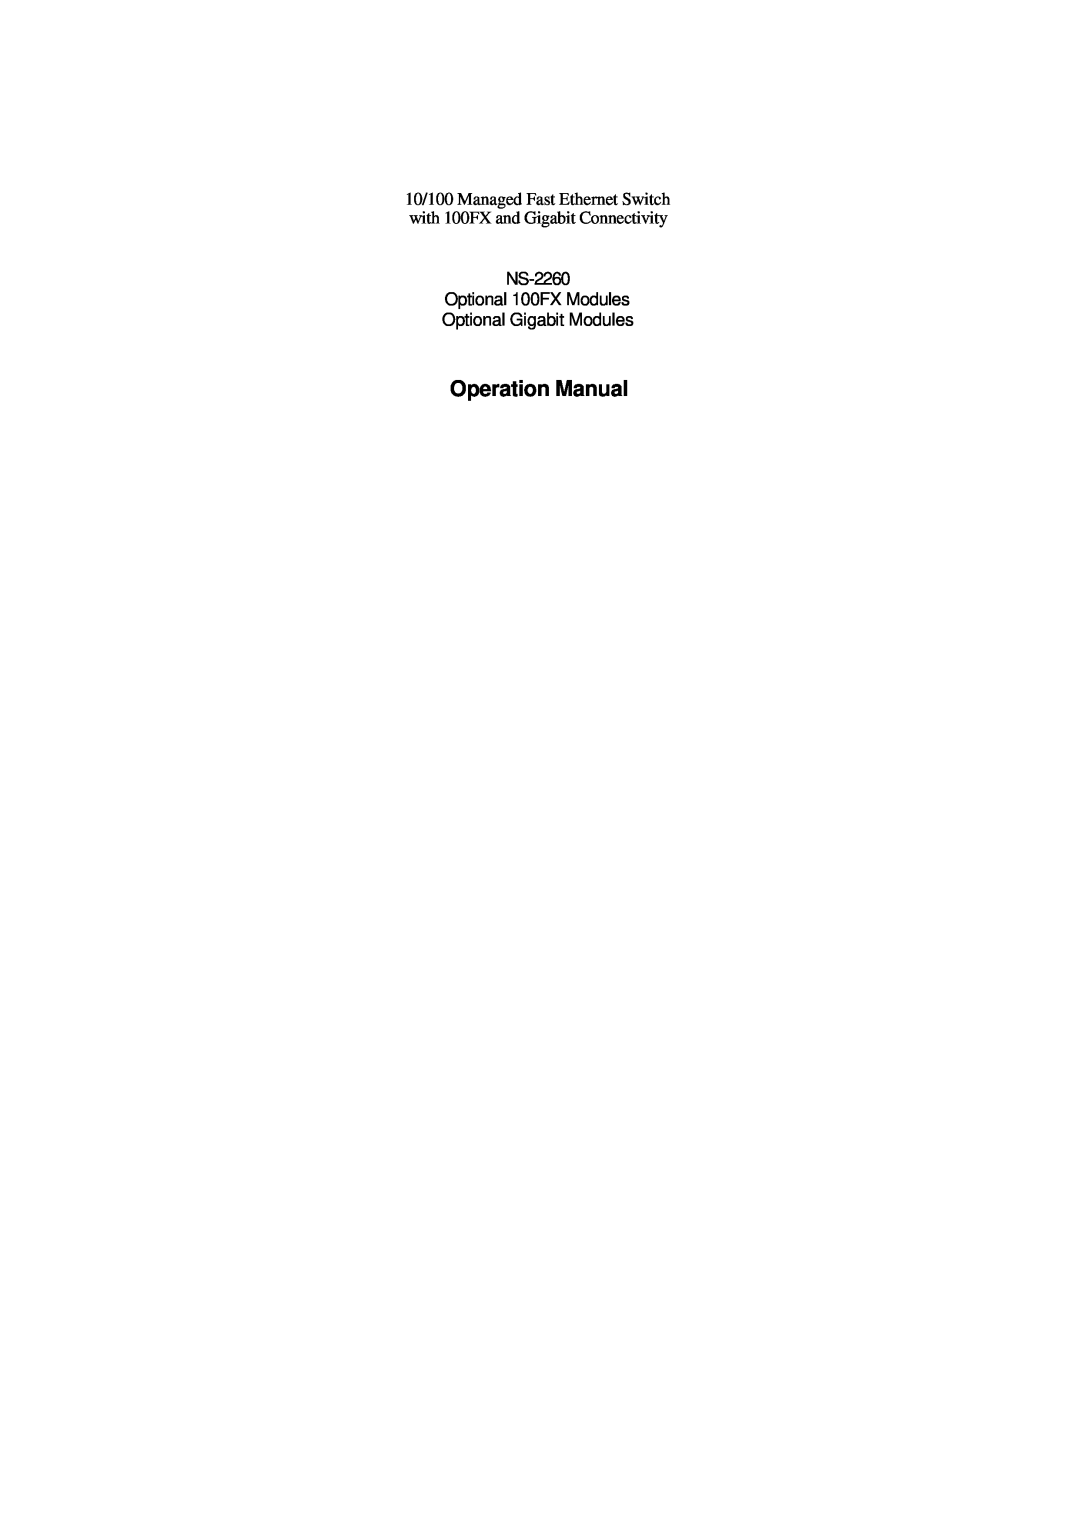 Xerox operation manual Operation Manual, NS-2260 Optional 100FX Modules, Optional Gigabit Modules 